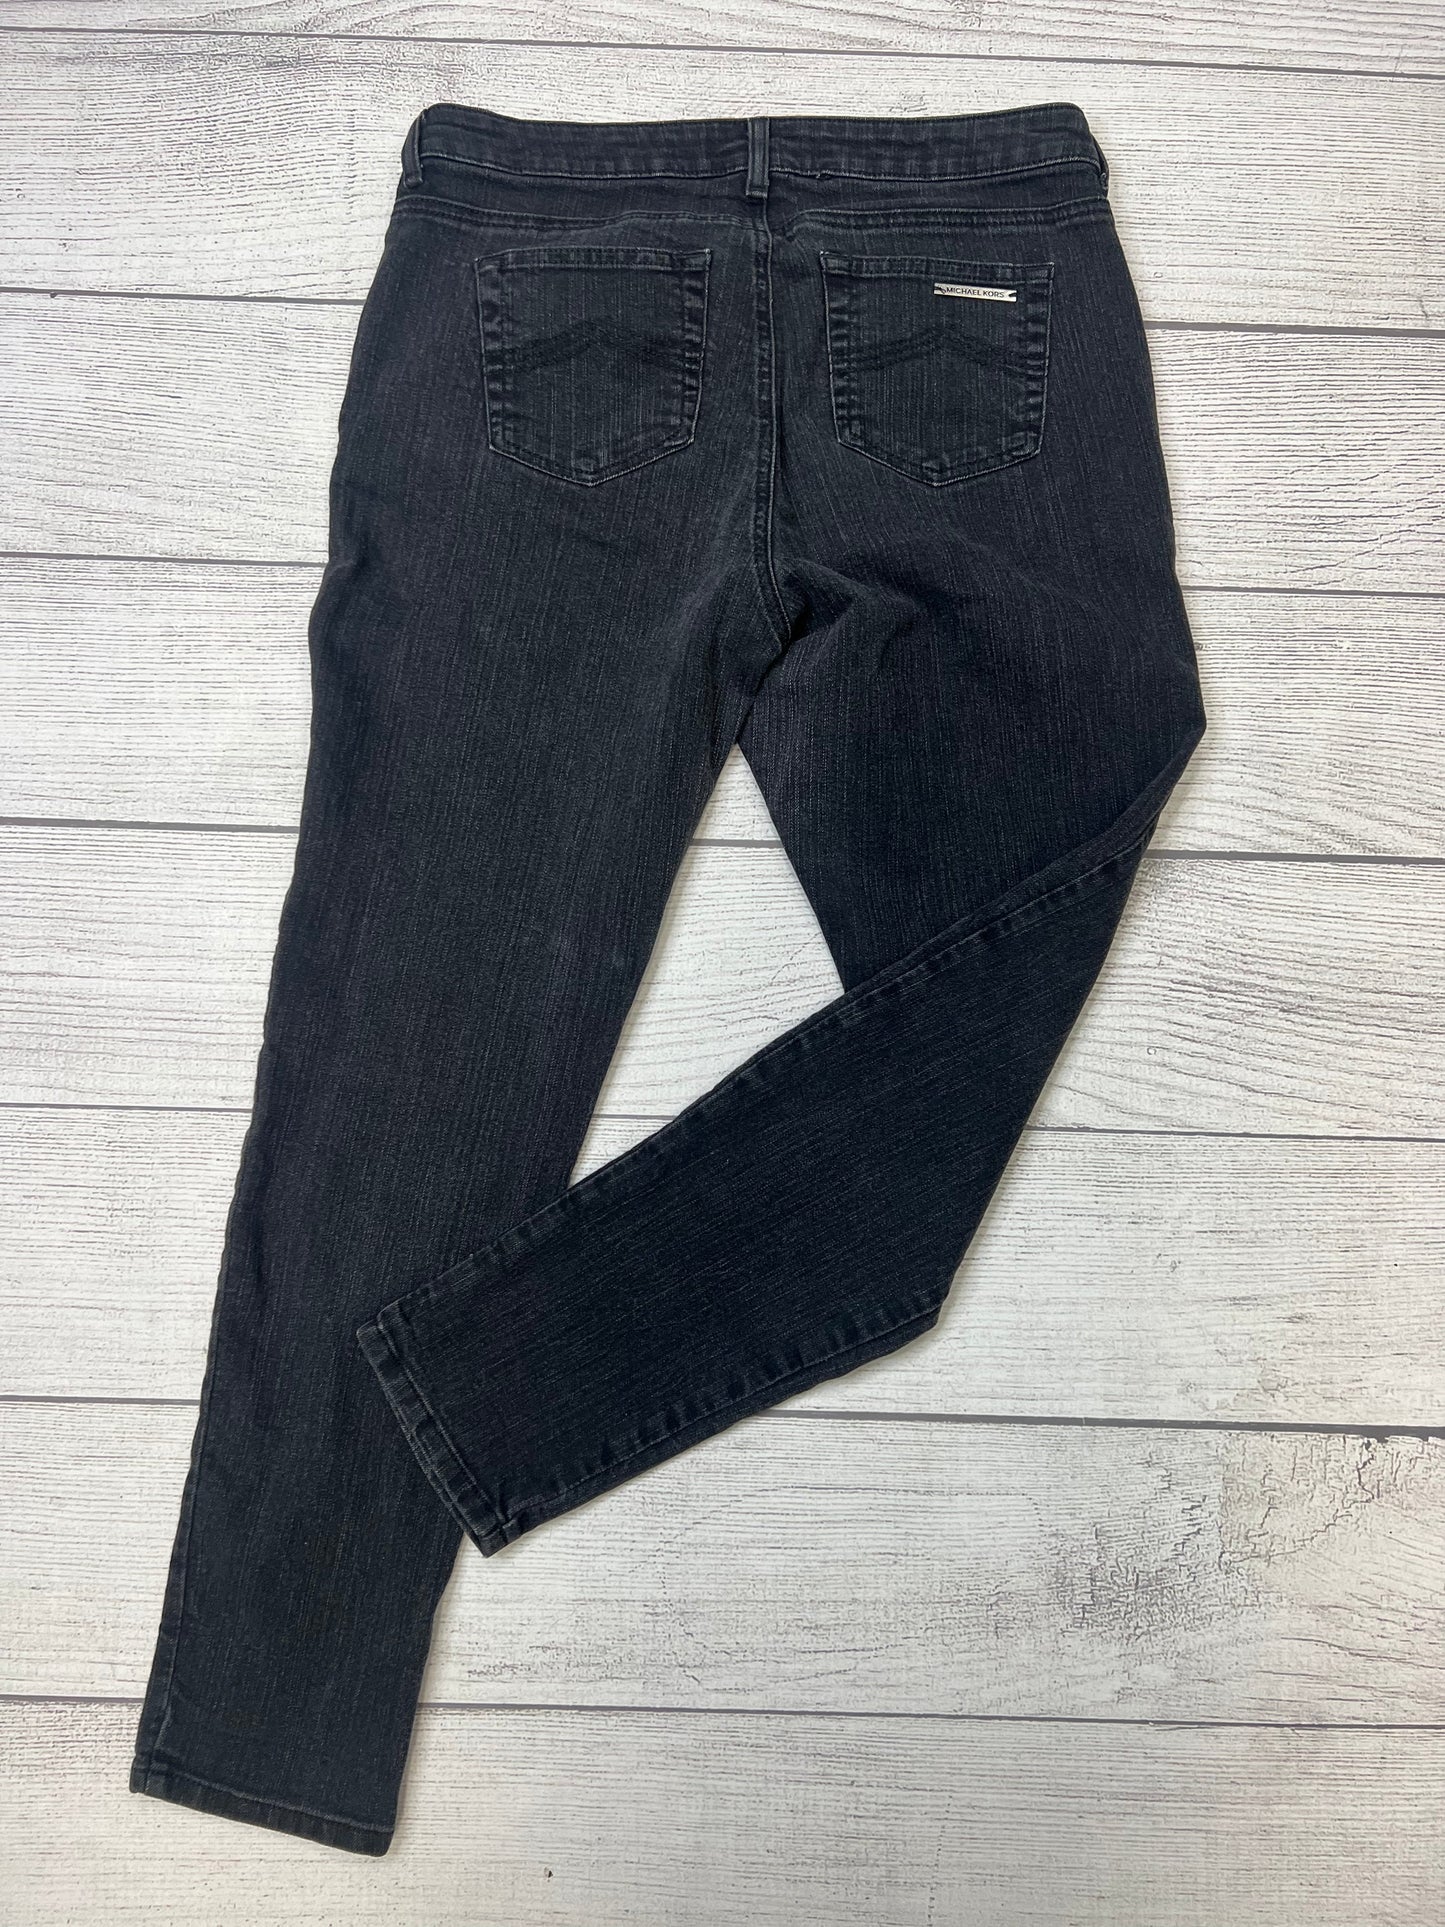 Black Jeans Designer Michael Kors, Size 14